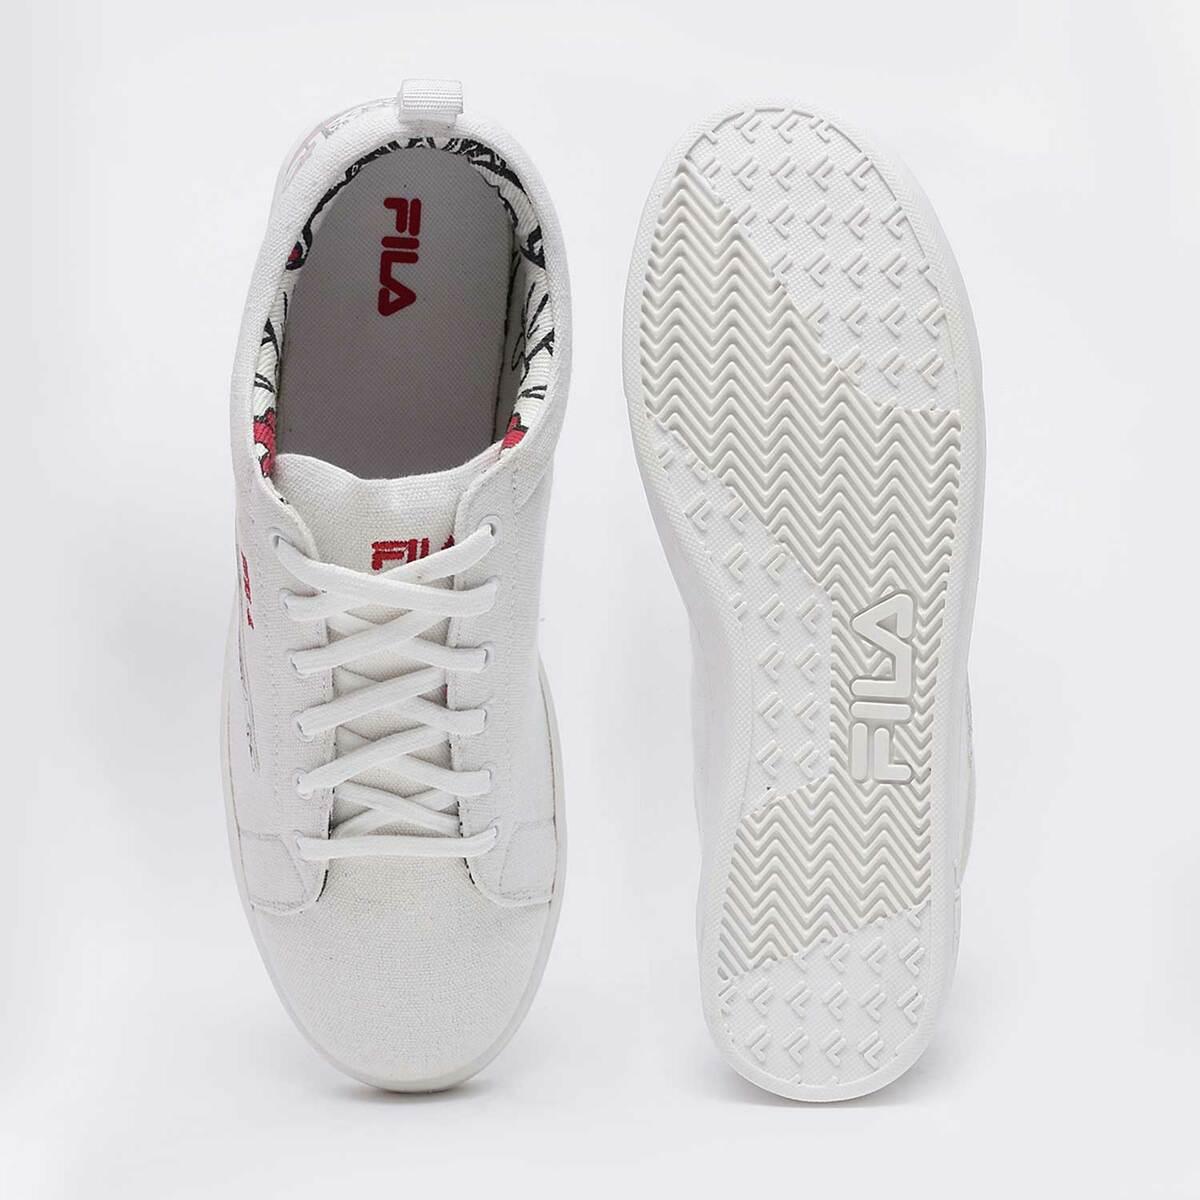 Buy Fila Pea/Bcd SND KOOP Men's Sneakers - 8 UK (42 EU) (7 US) (11007384)  at Amazon.in